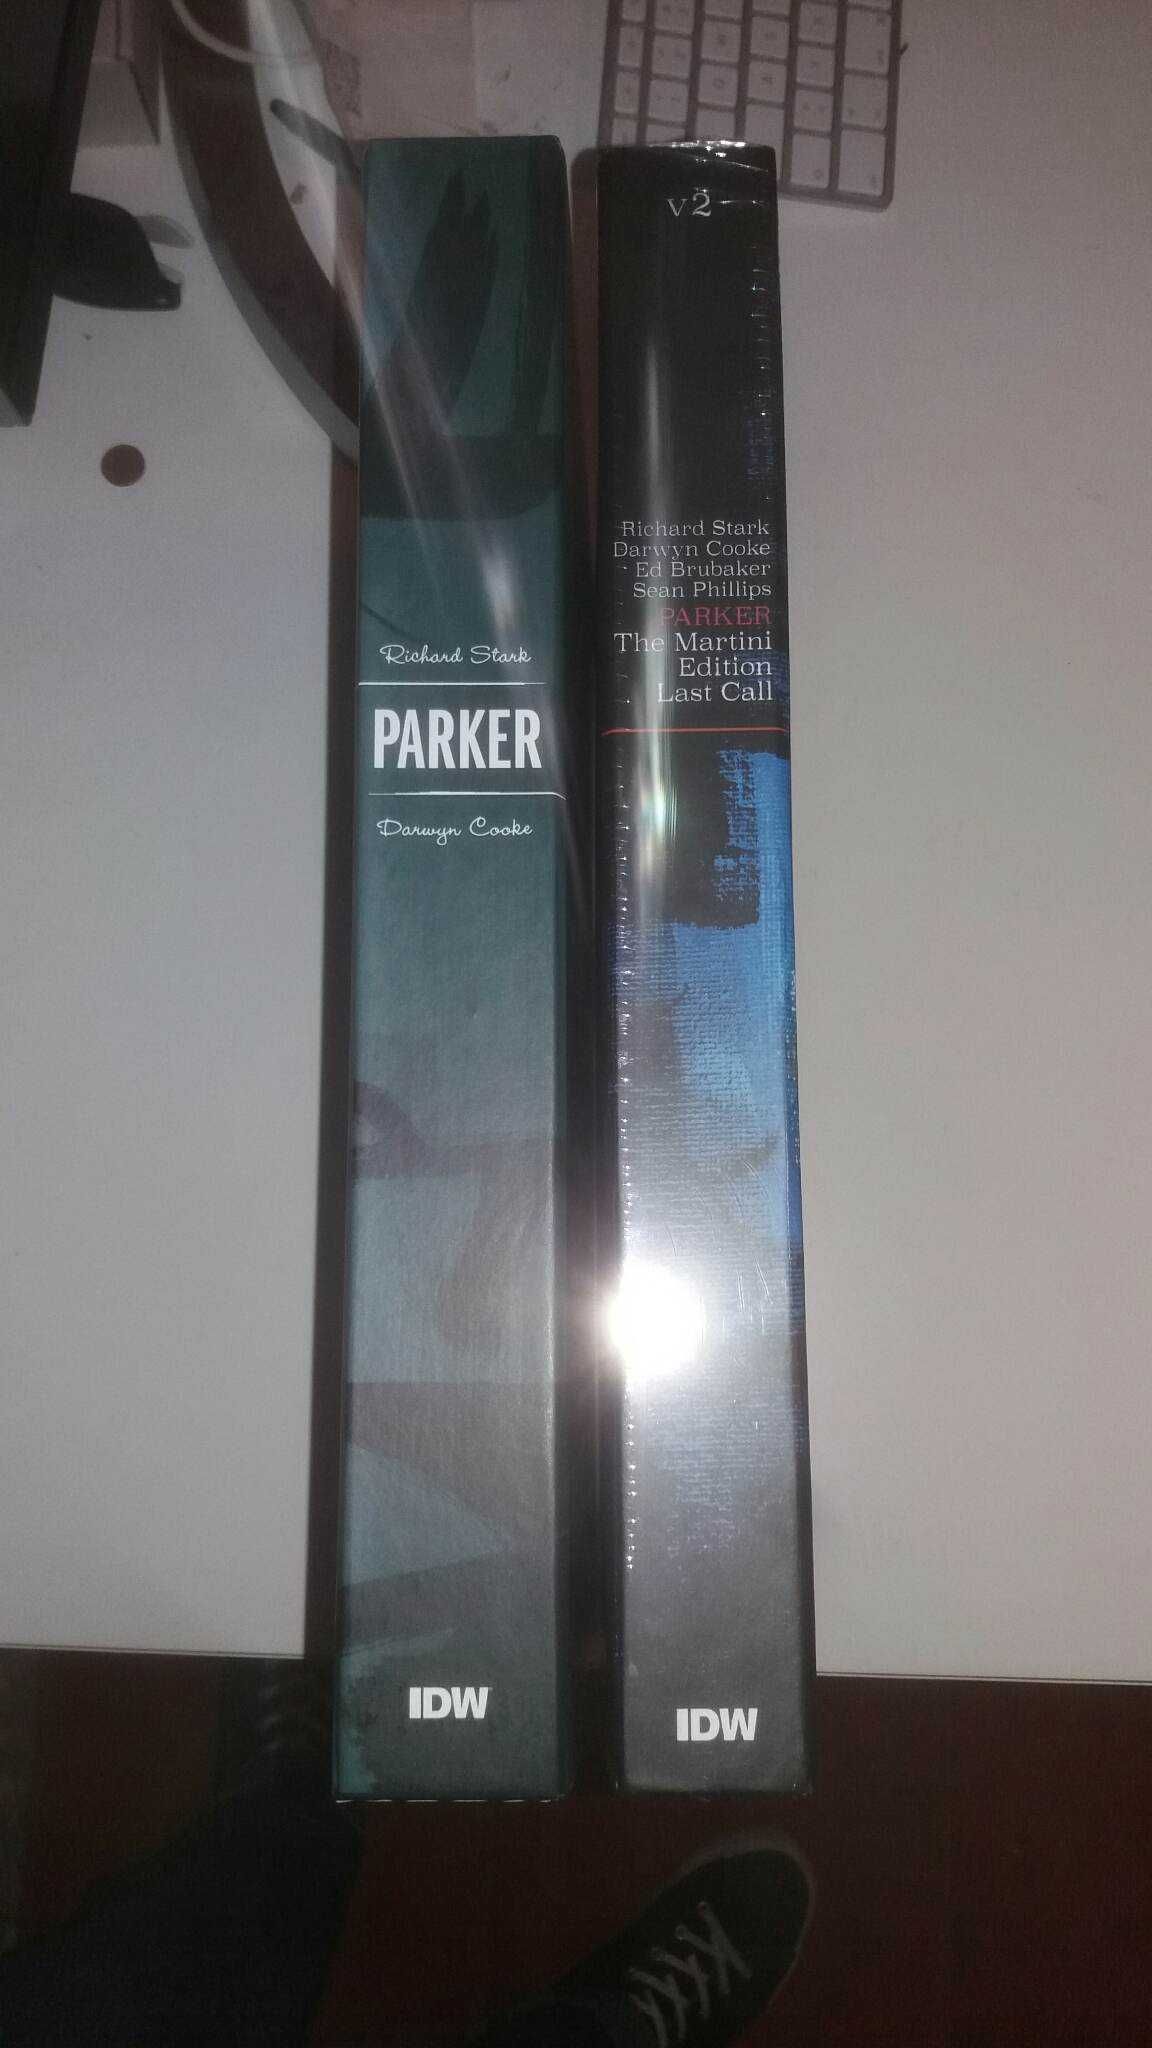 R. Stark Parker Martini Edition Darwin Cooke Ed Brubaker Sean Phillips